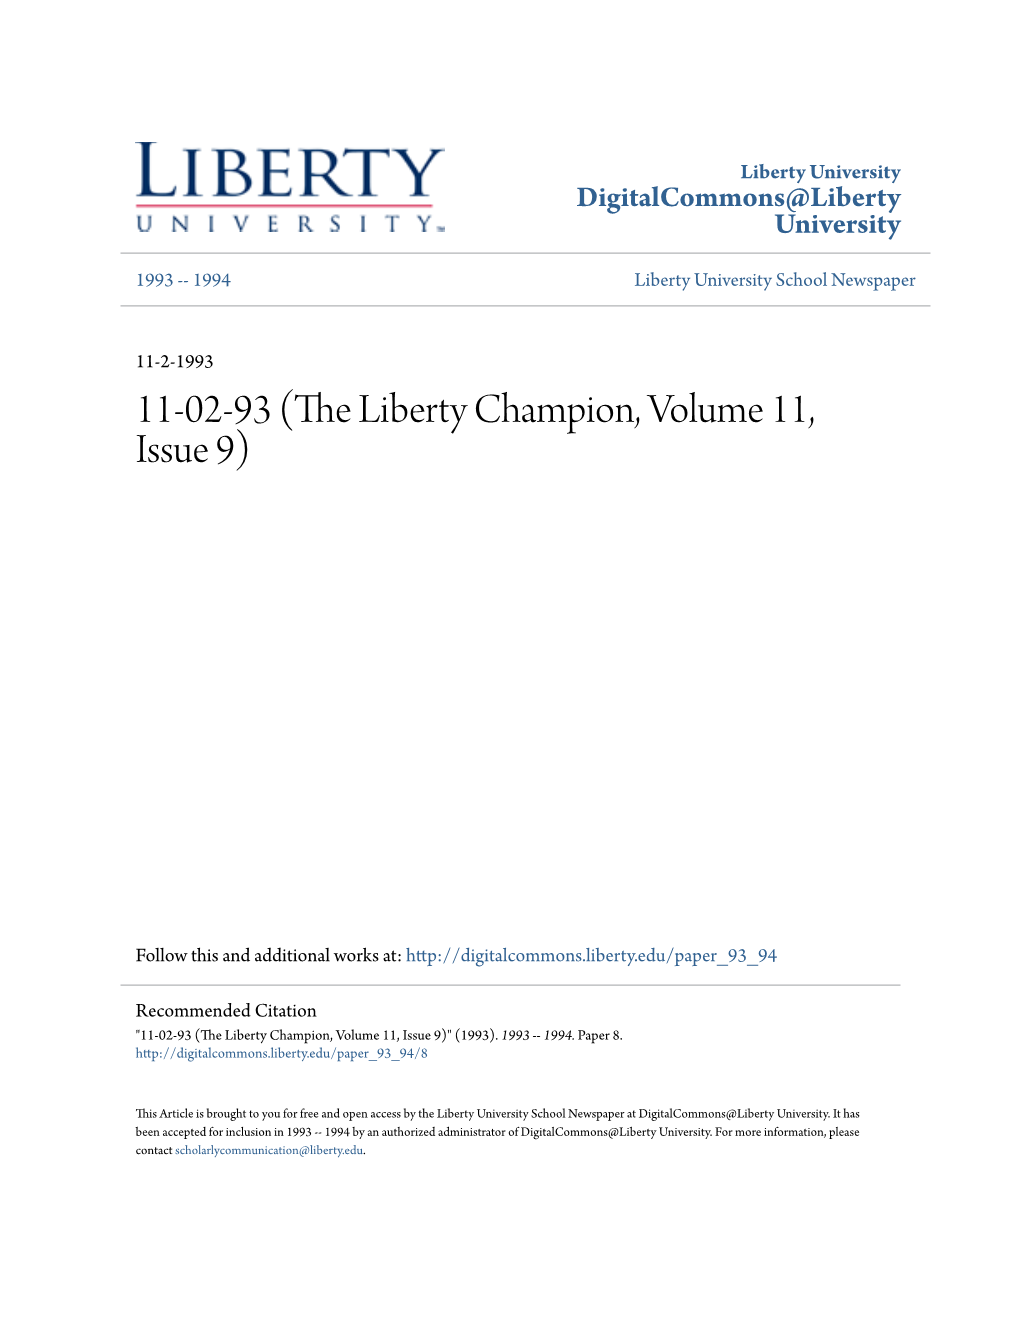 11-02-93 (The Liberty Champion, Volume 11, Issue 9)